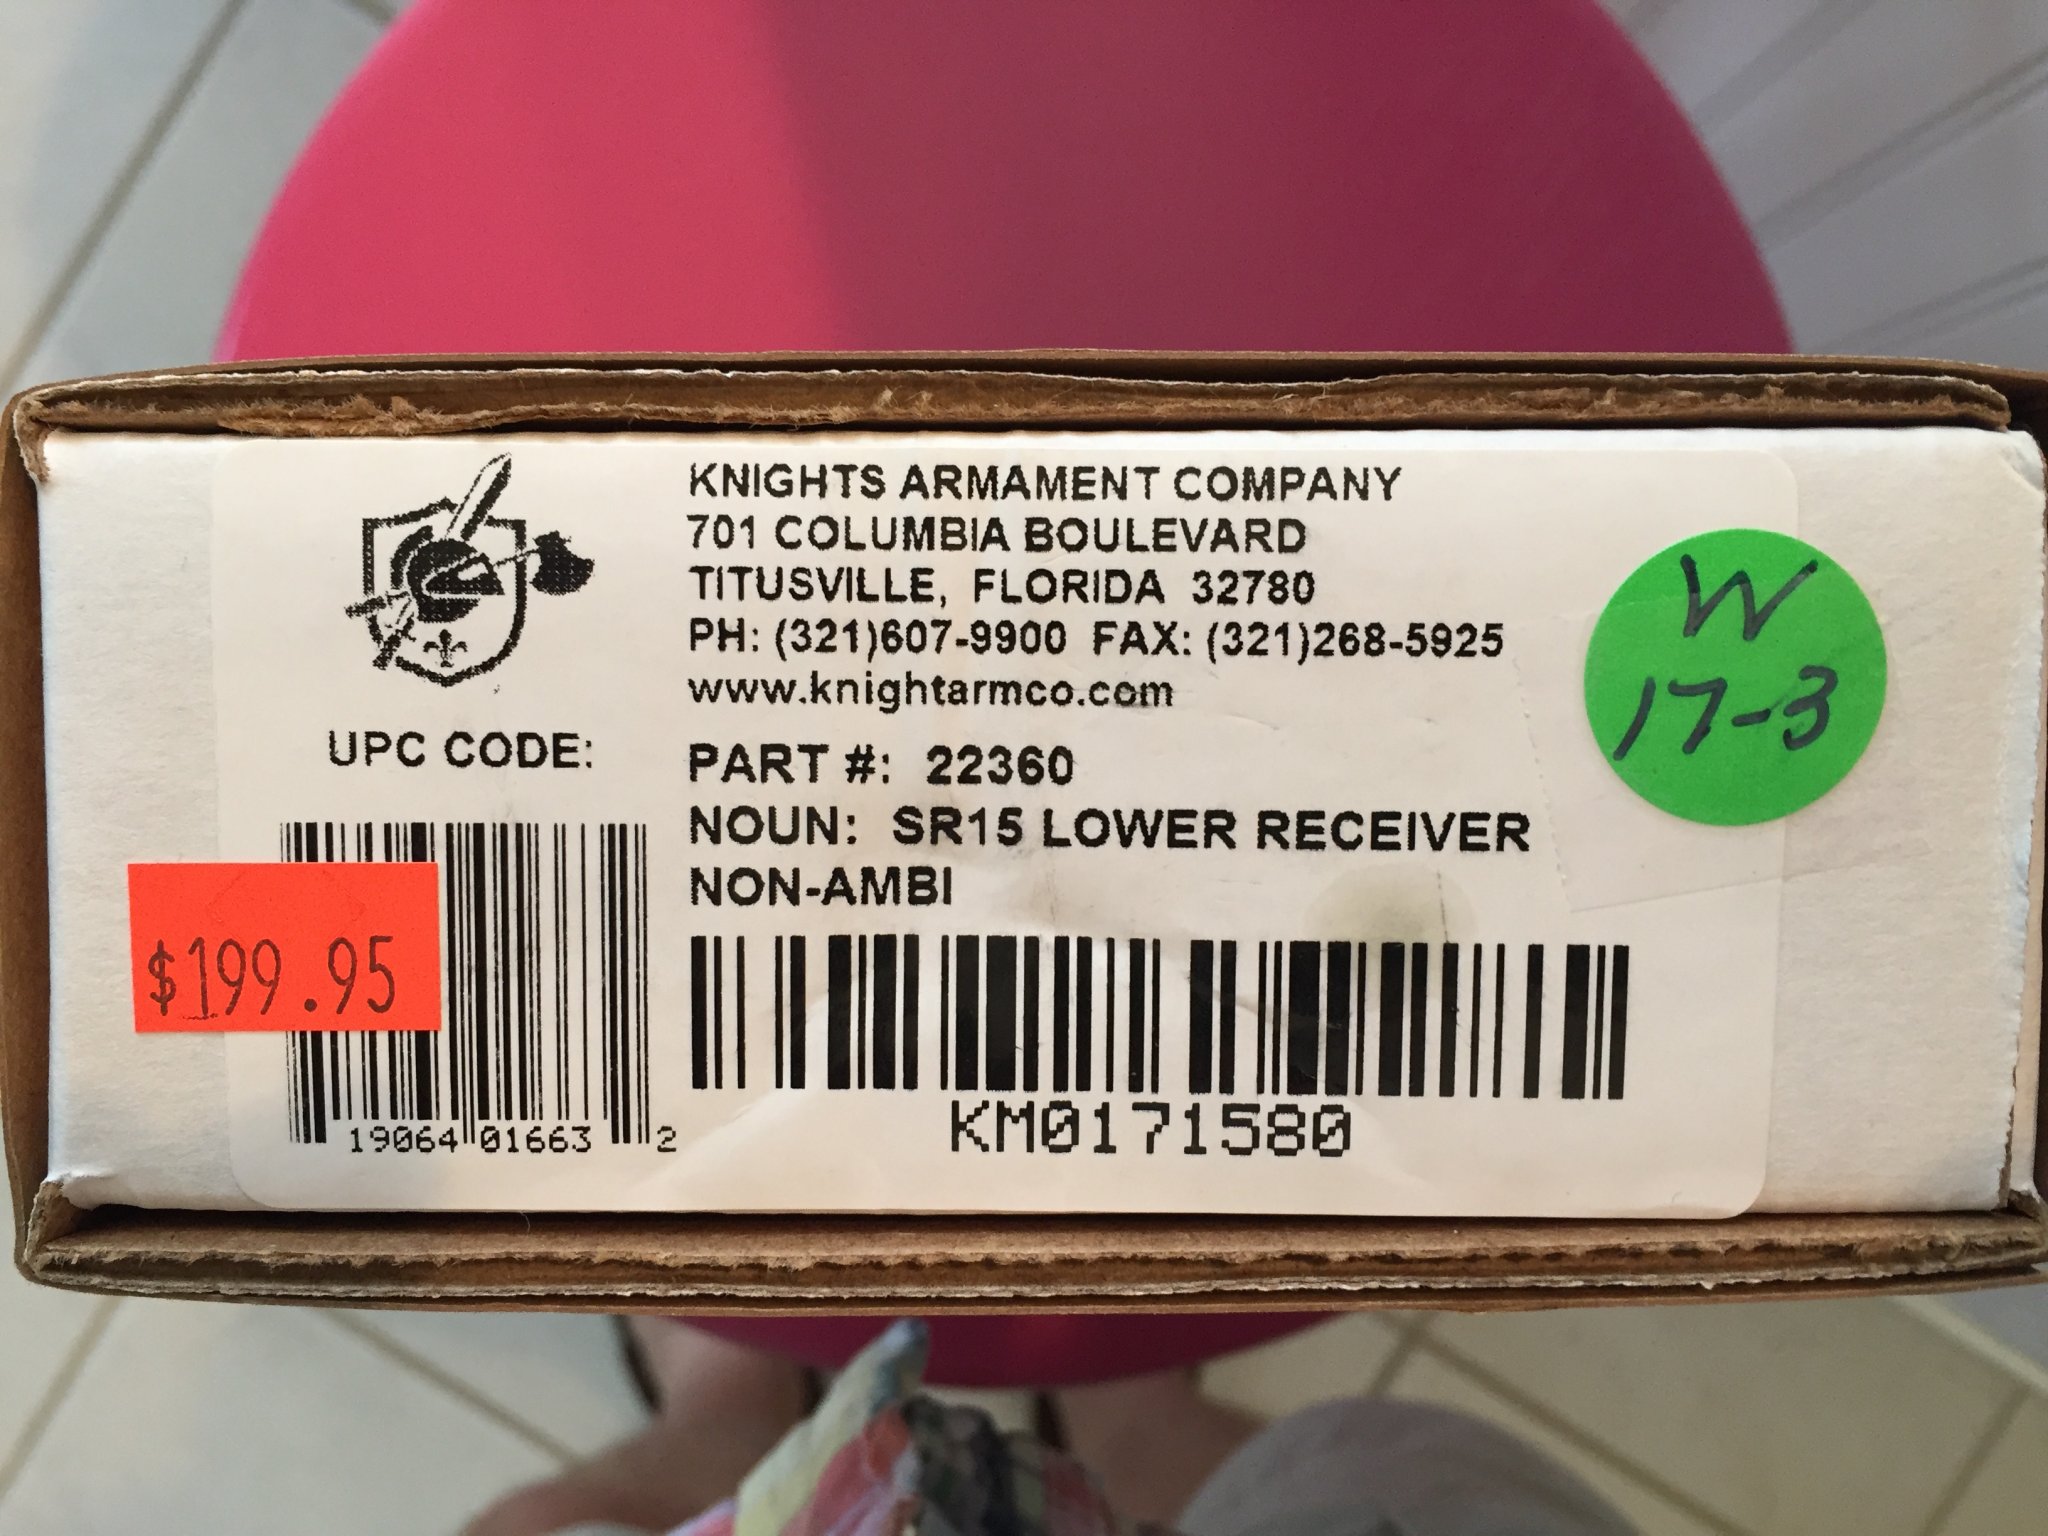  Knights Armament Company SR15 Lower Receiver Box copy.JPG